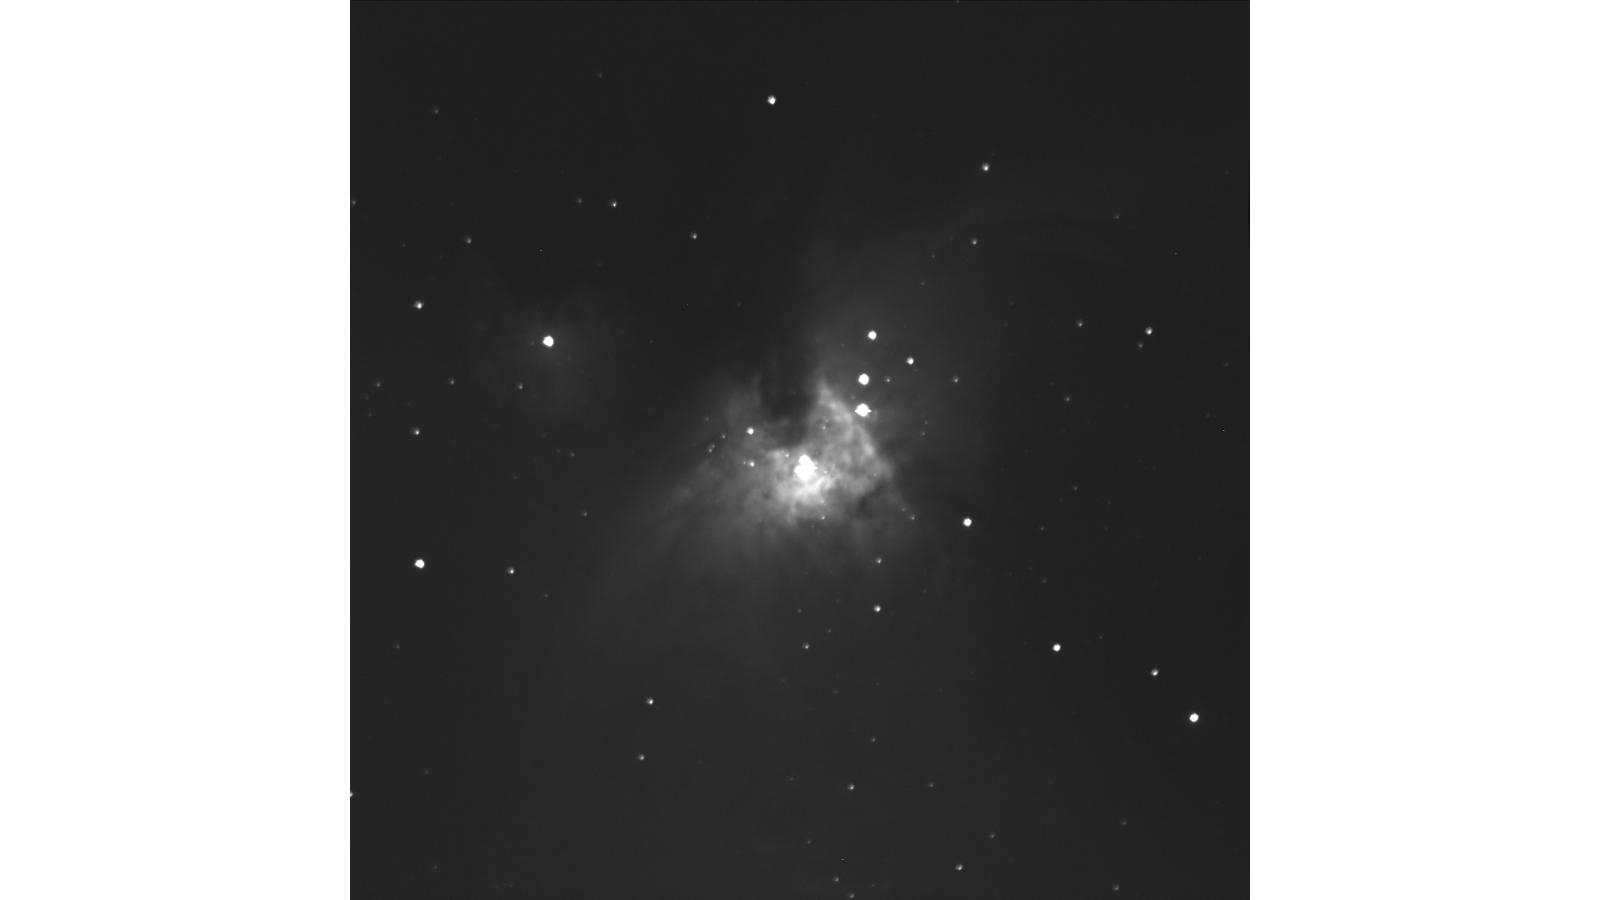 DEMONEX first light image of the Orion Nebula (M42)